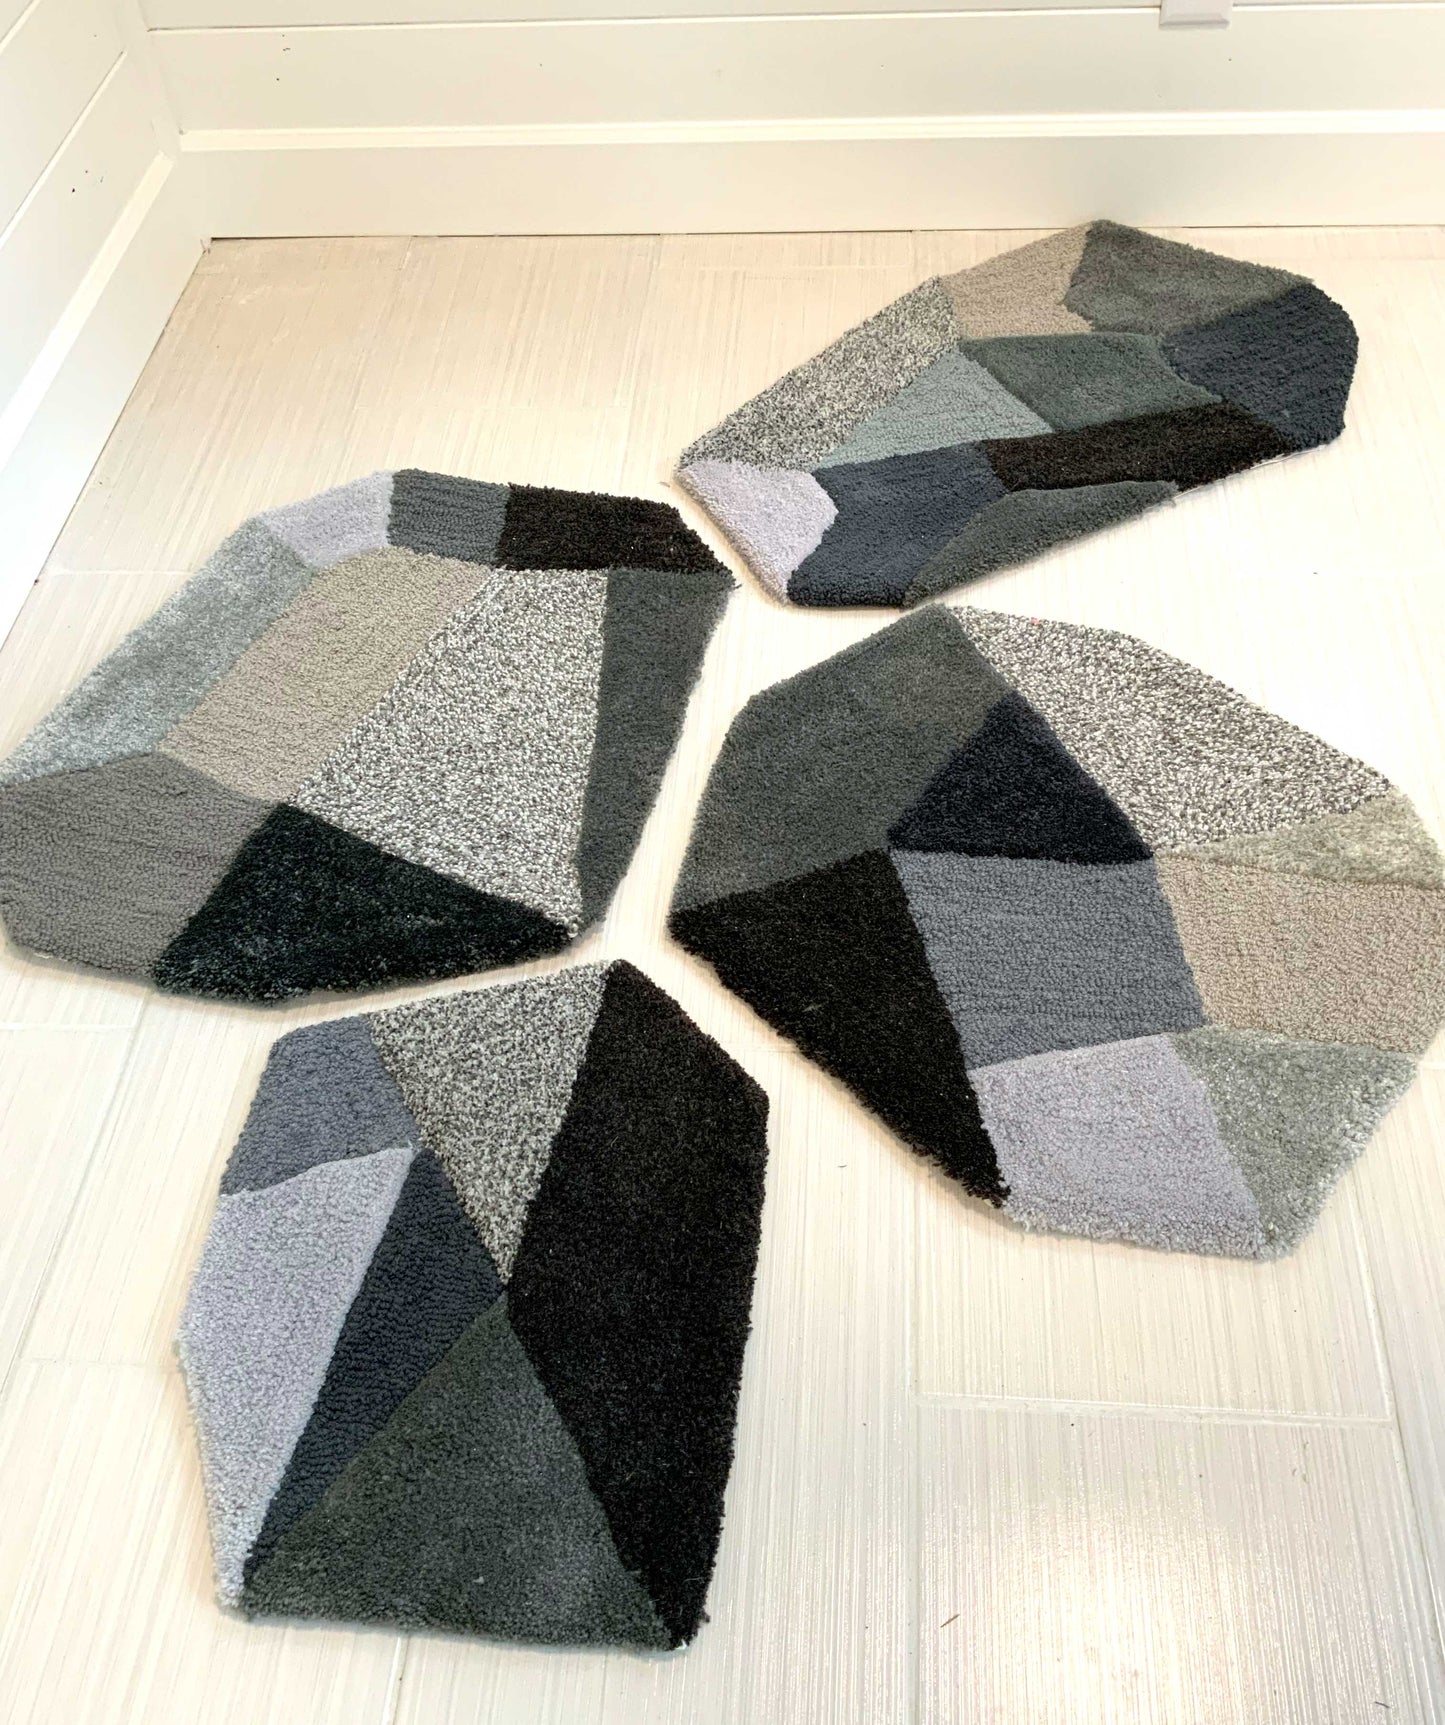 Hand tufted geometric rock rug, 70% wool and 30% acrylic